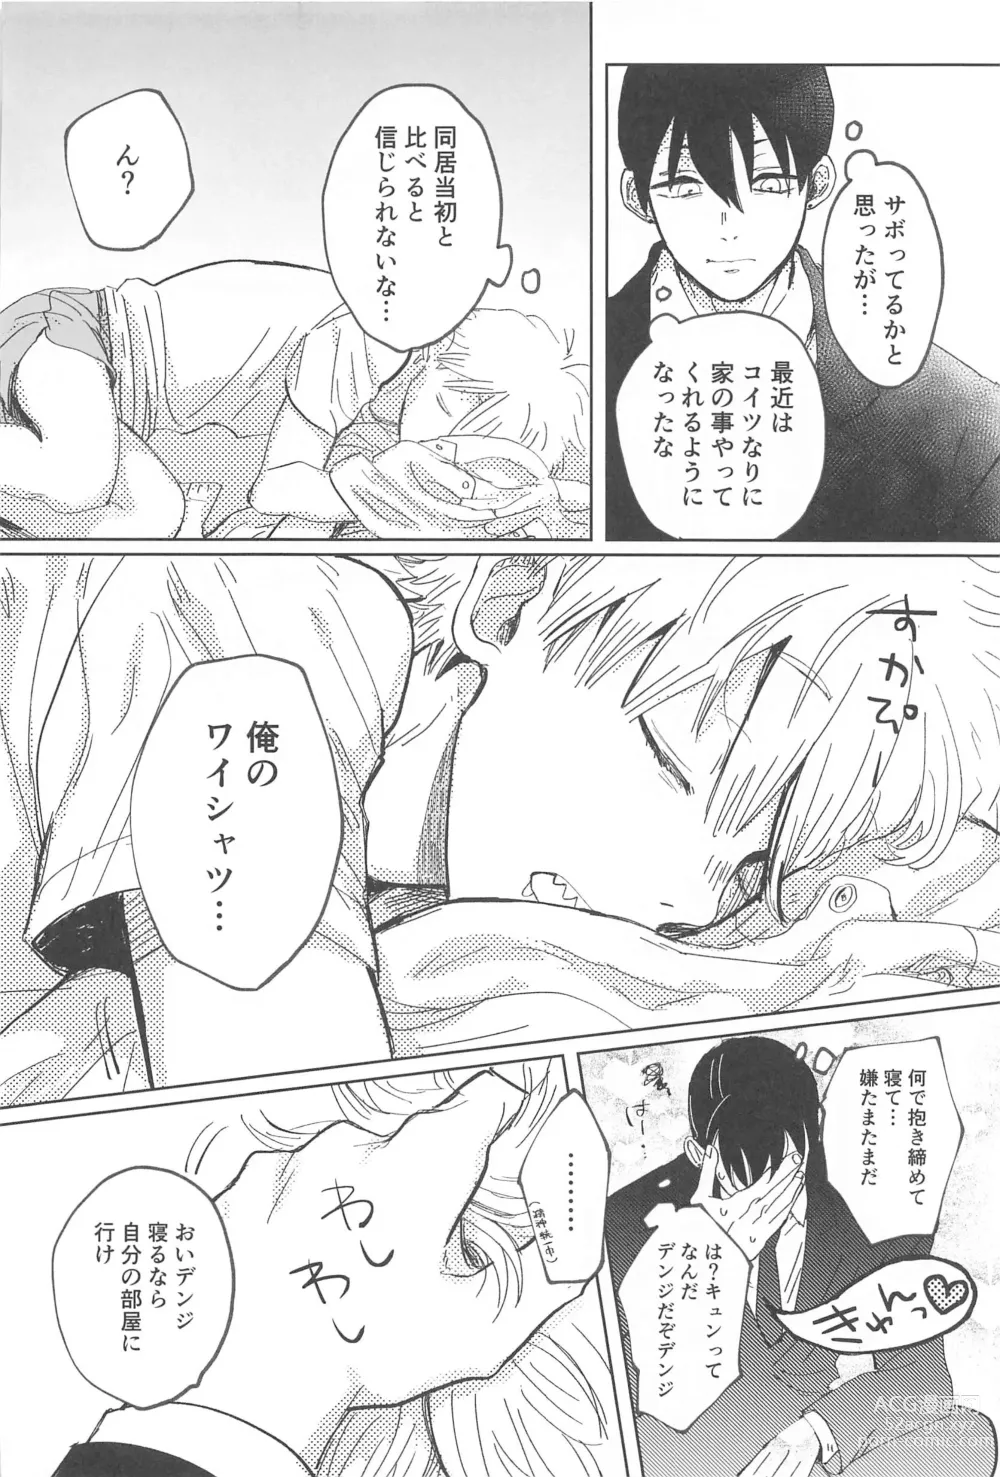 Page 6 of doujinshi Kawaii Anoko